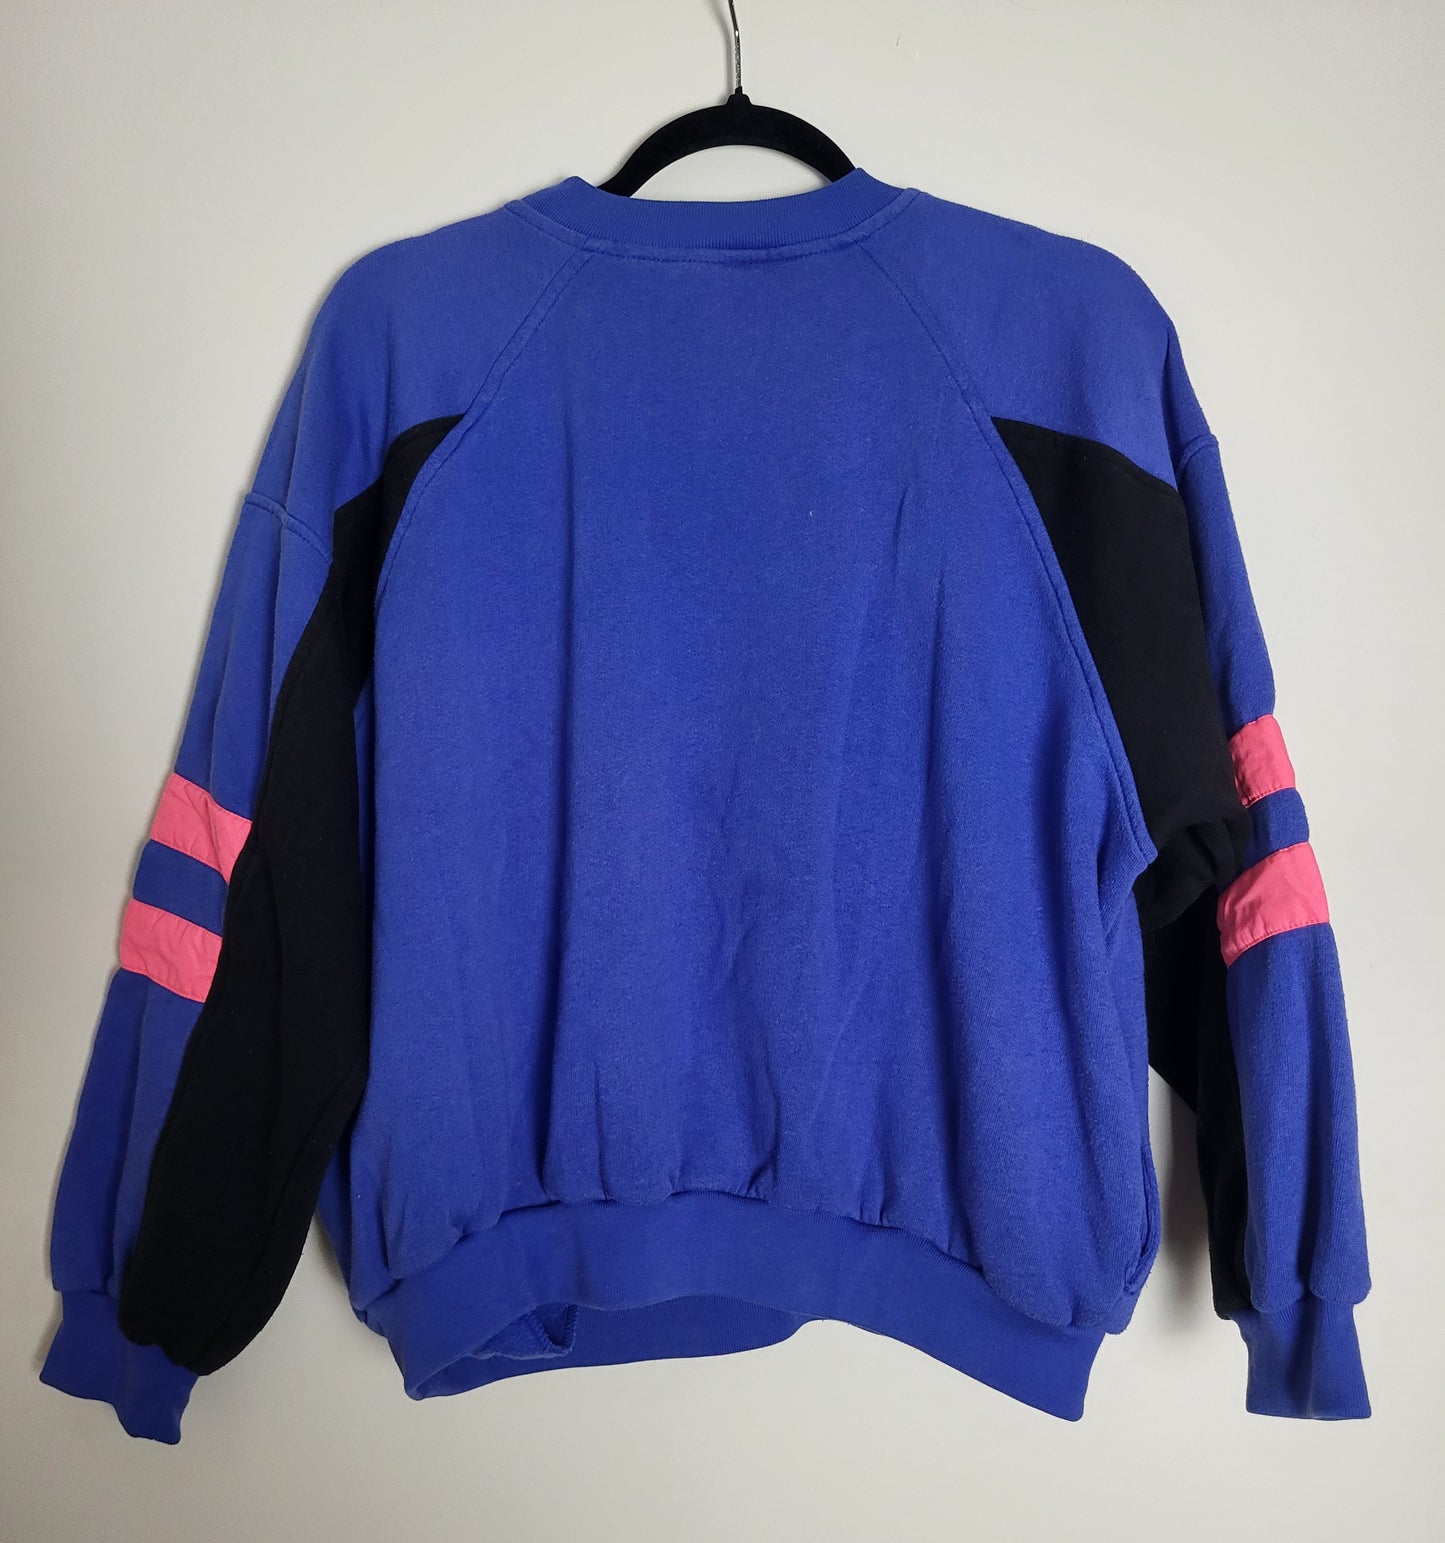 GIVENCHY ACTIVE - Vintage Pullover - Muster mit Logo - Bunt - Damen - M